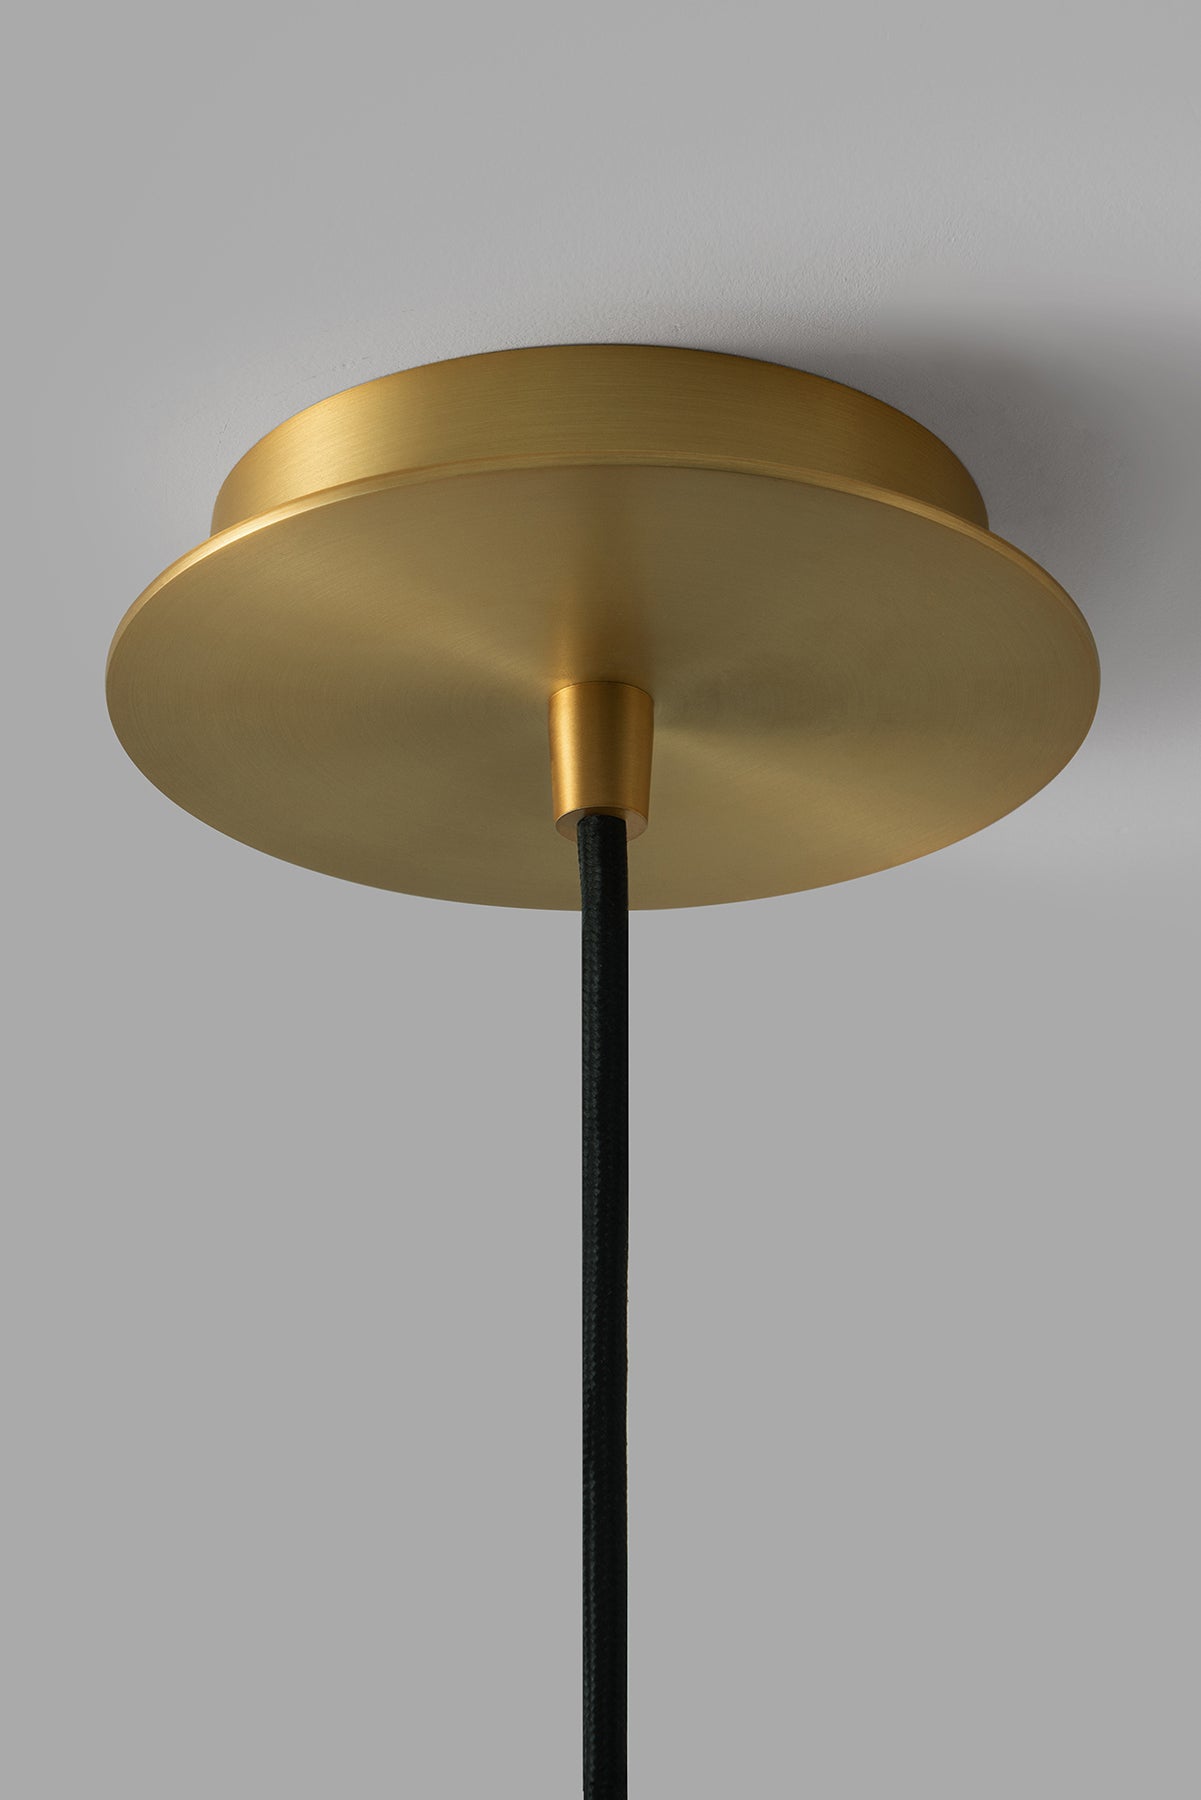 Modern pendant light with warm vintage style LED T14 light bulb